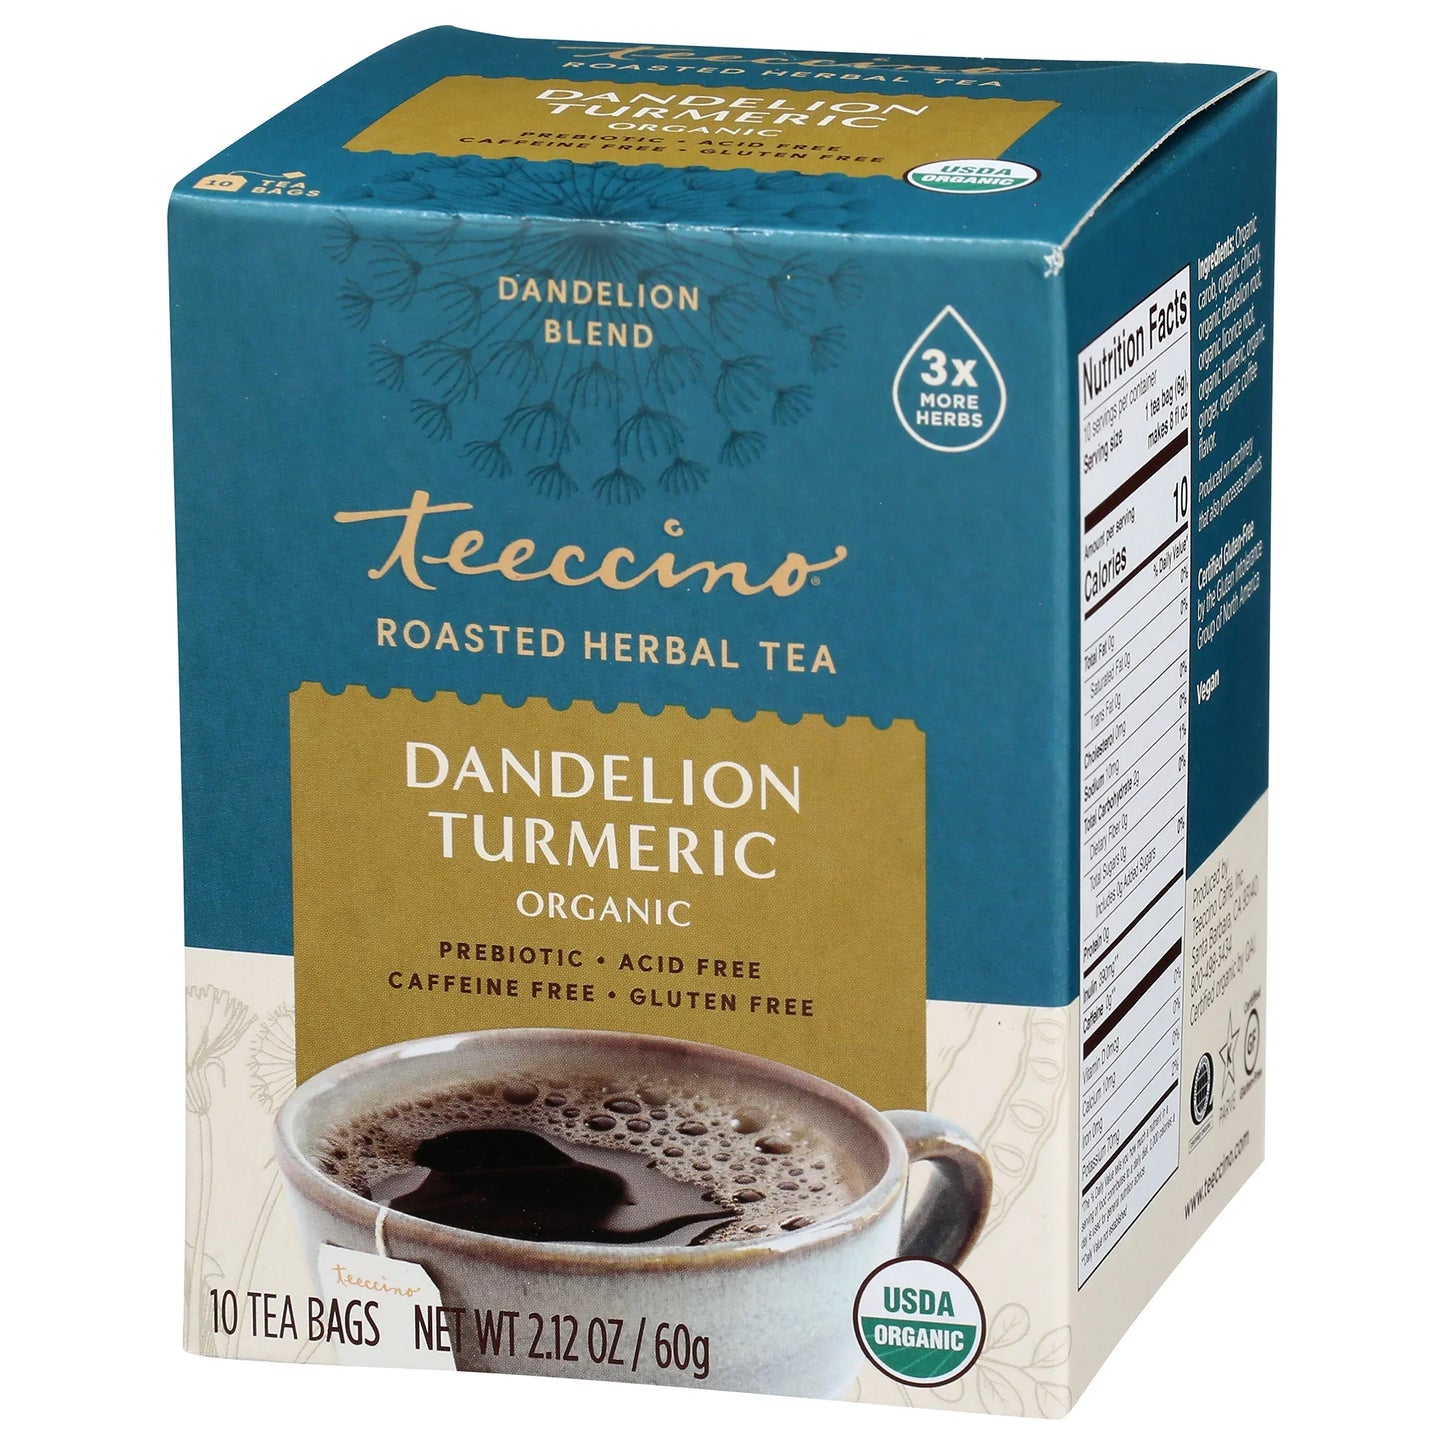 Dandelion Turmeric Roasted Herbal Tea